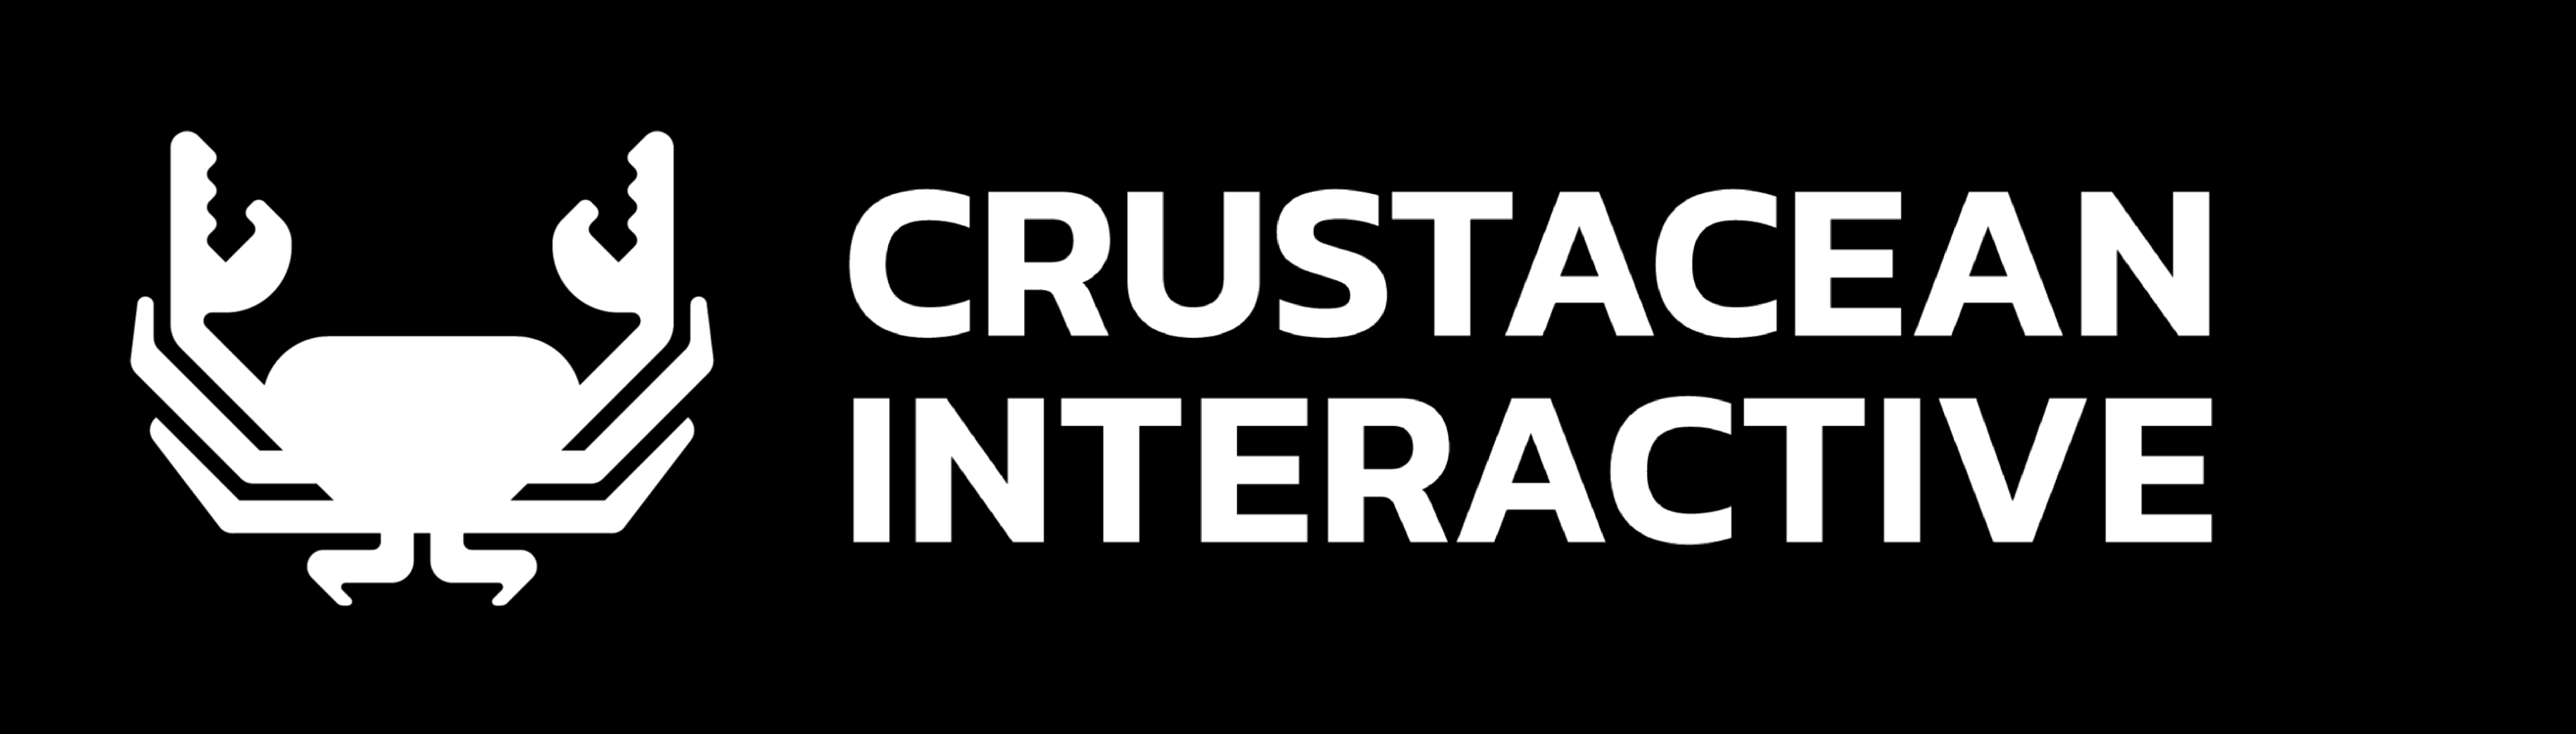 crustacean-logo-banner-dark